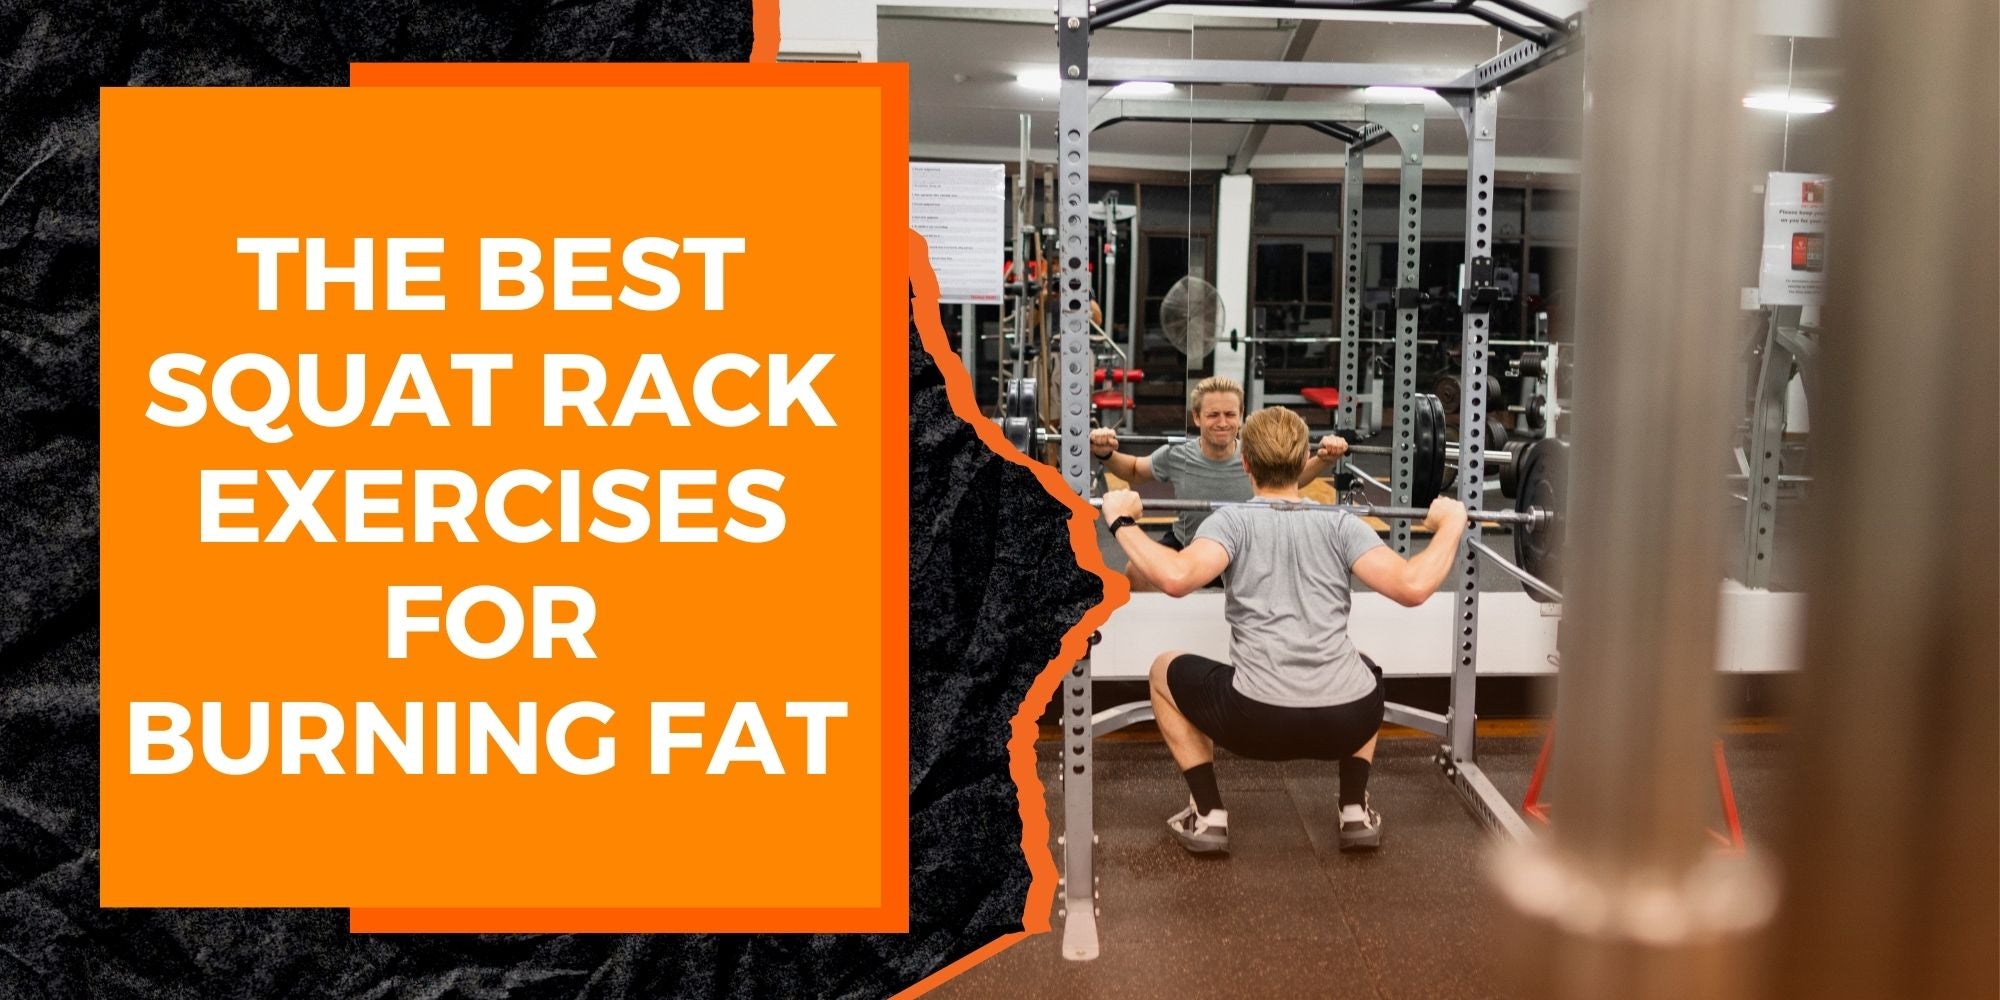 The Best Squat Rack Exercises for Burning Fat